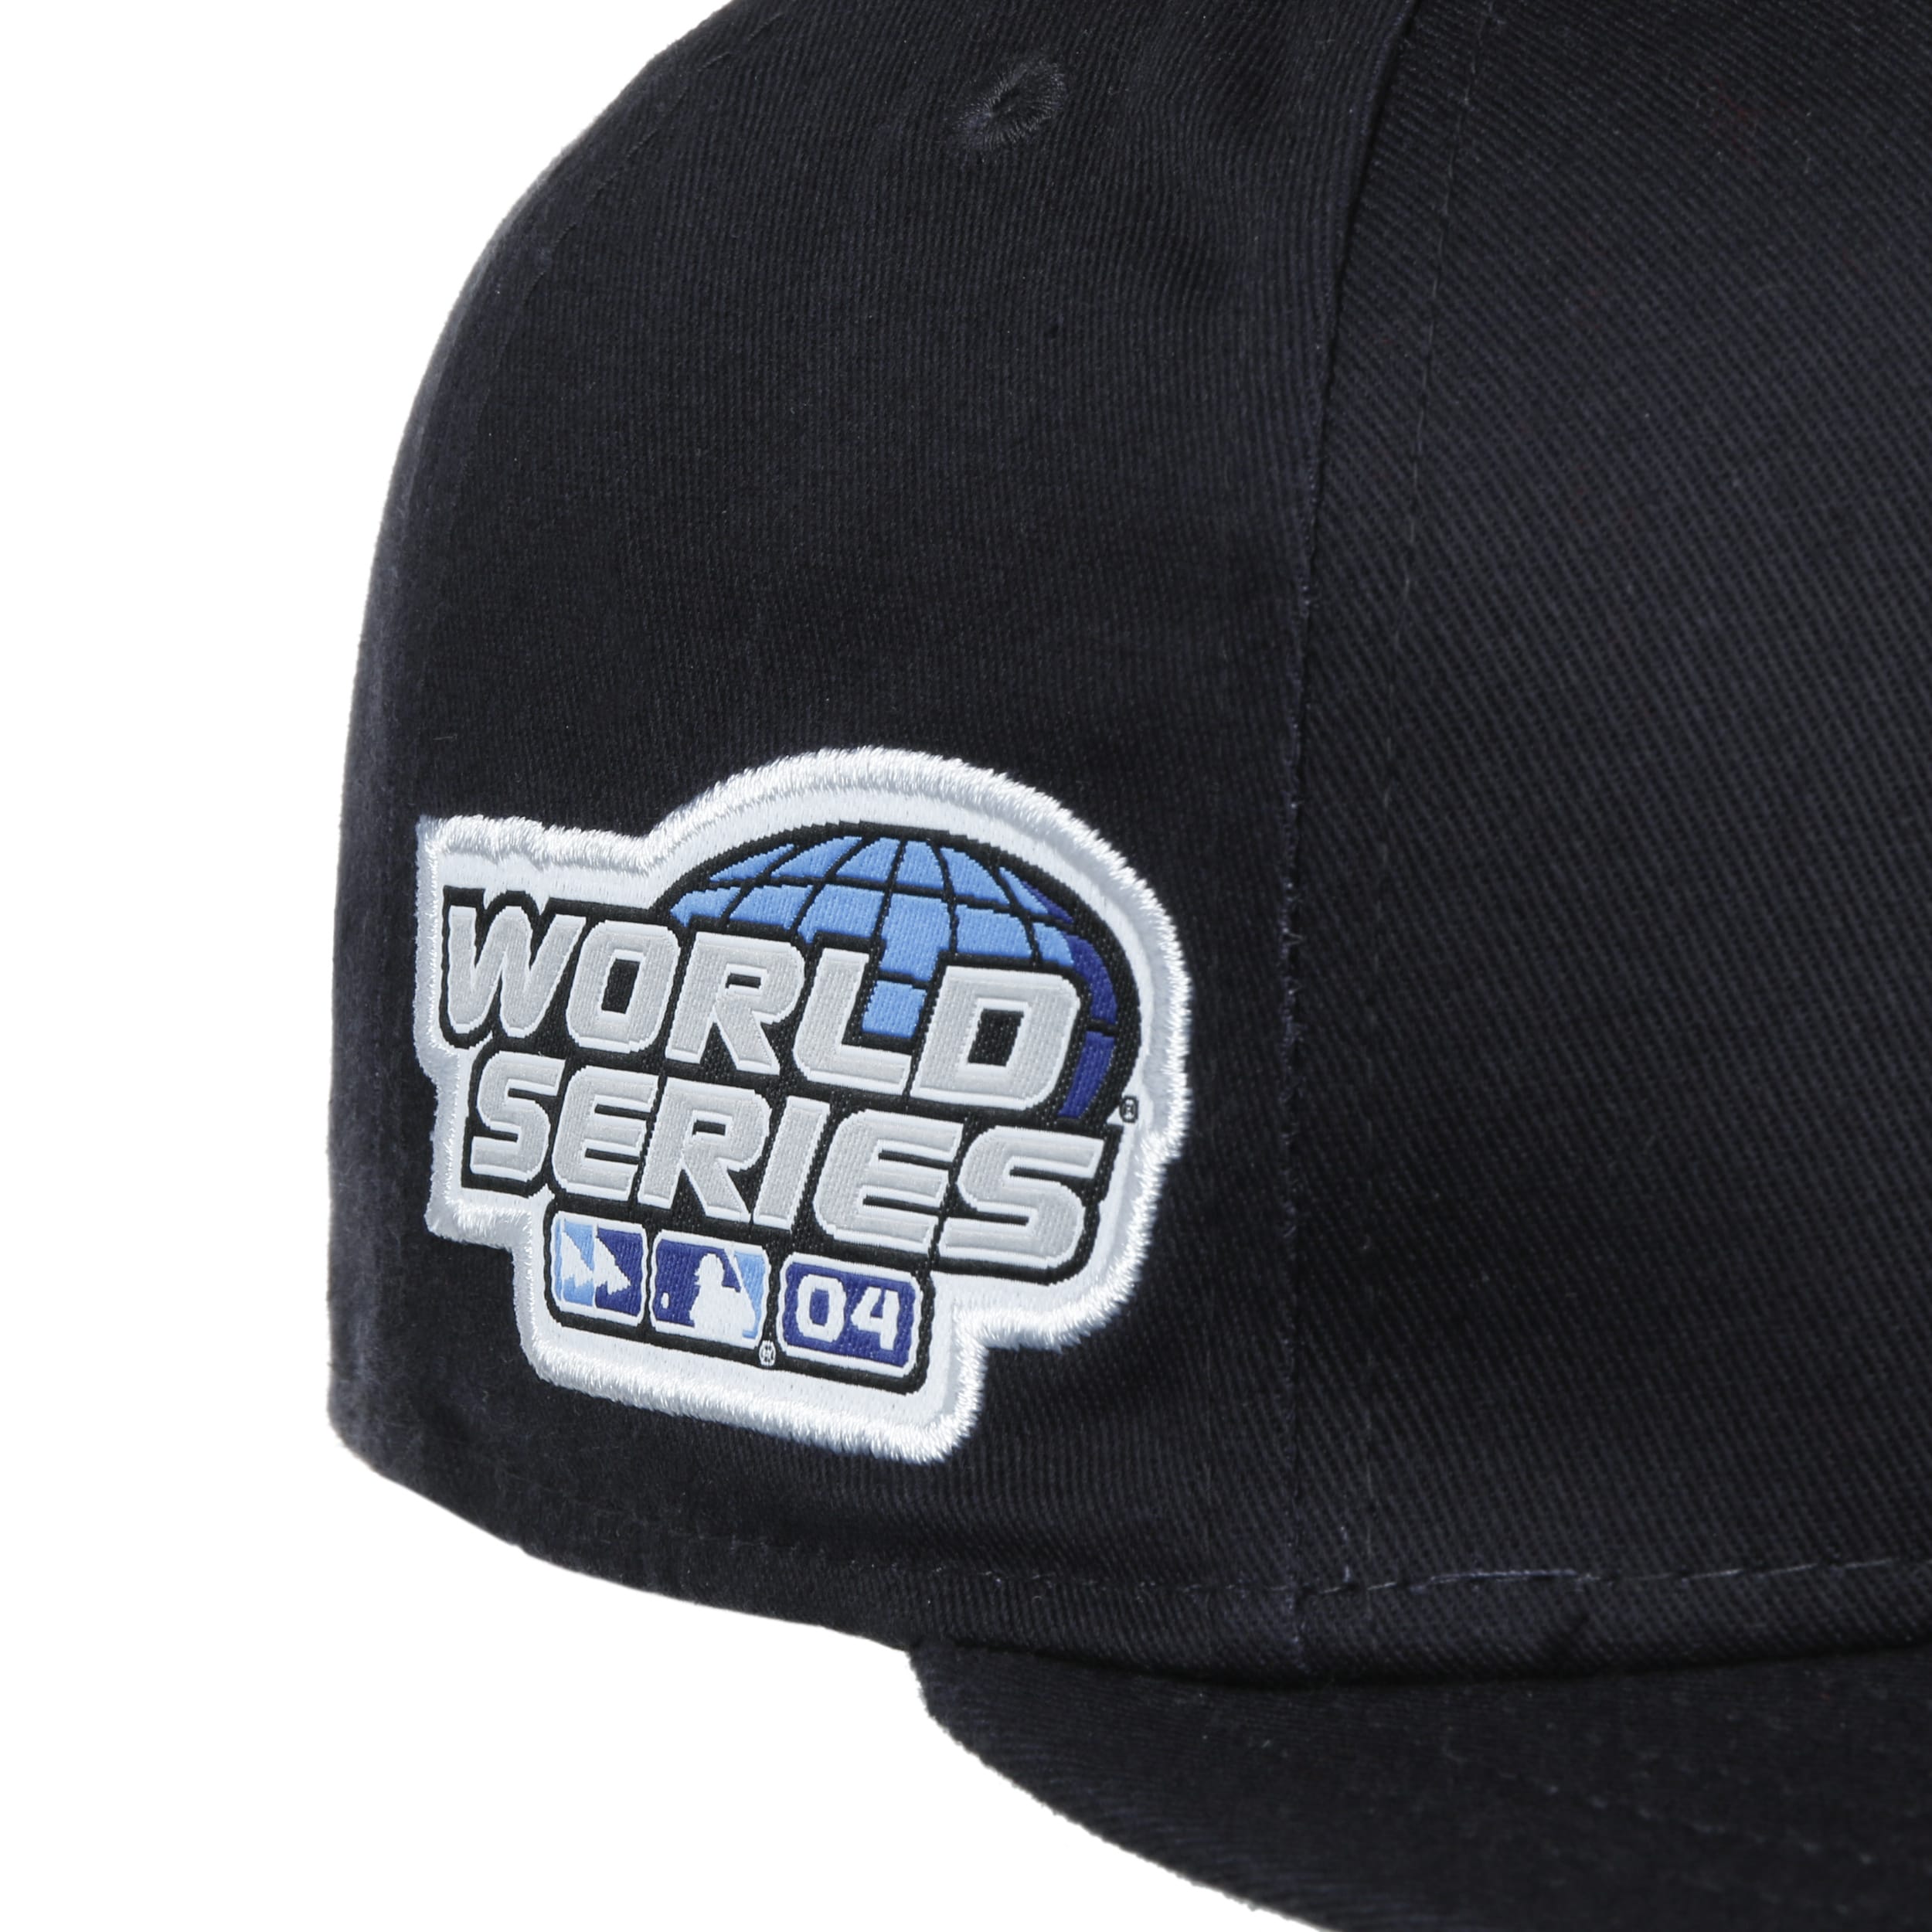 2009 world series patch